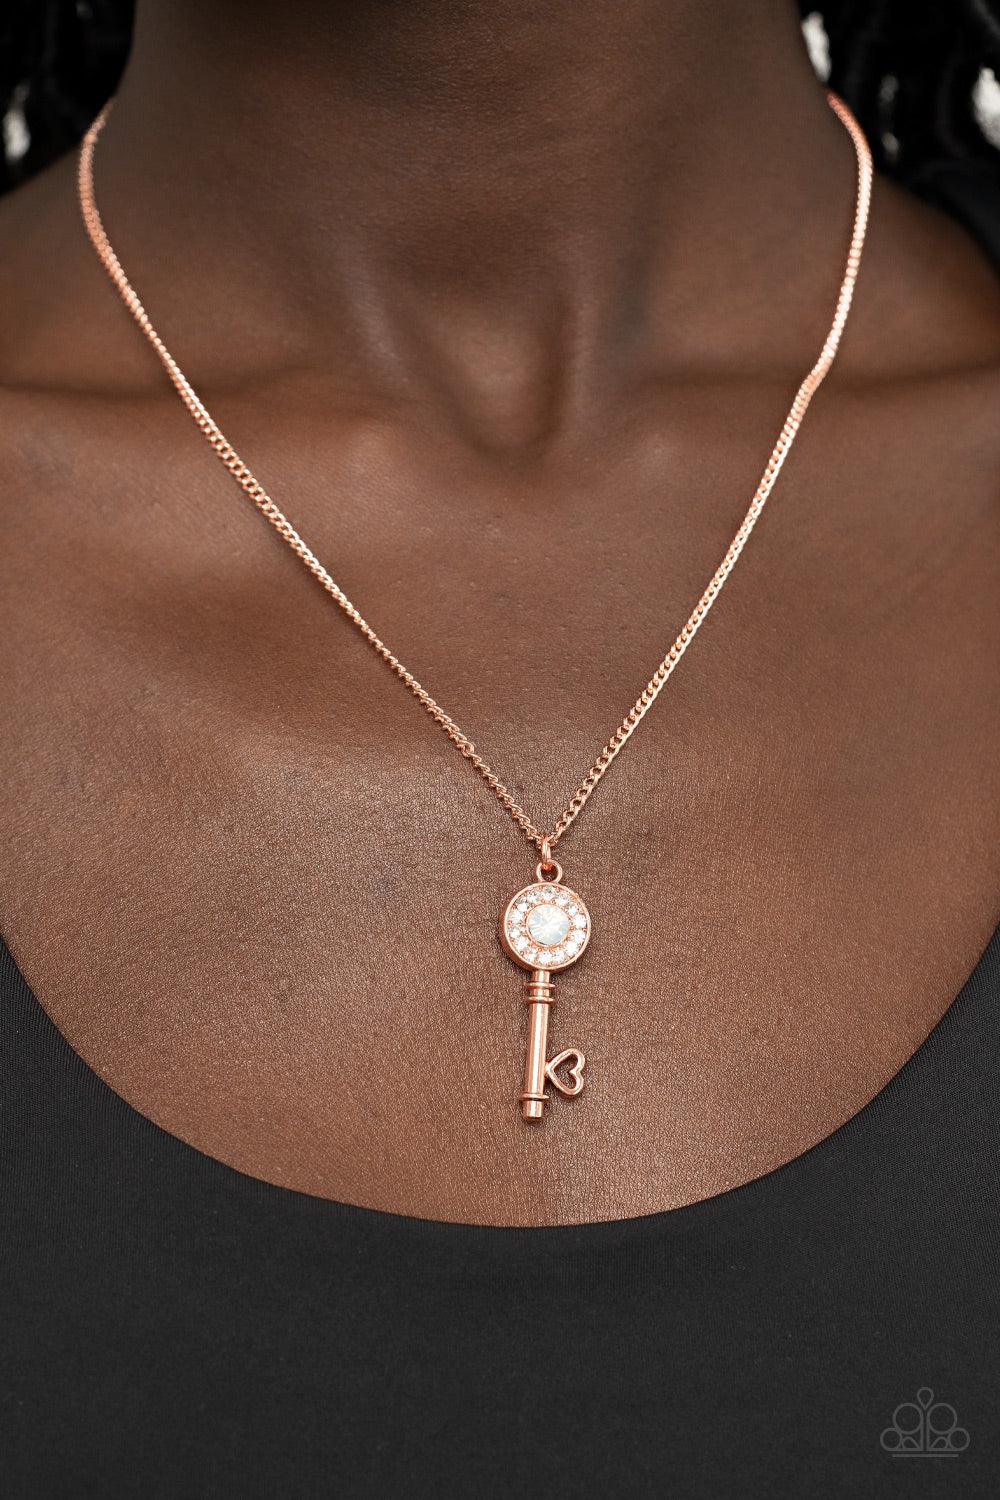 Prized Key Player Copper Necklace - Jewelry by Bretta